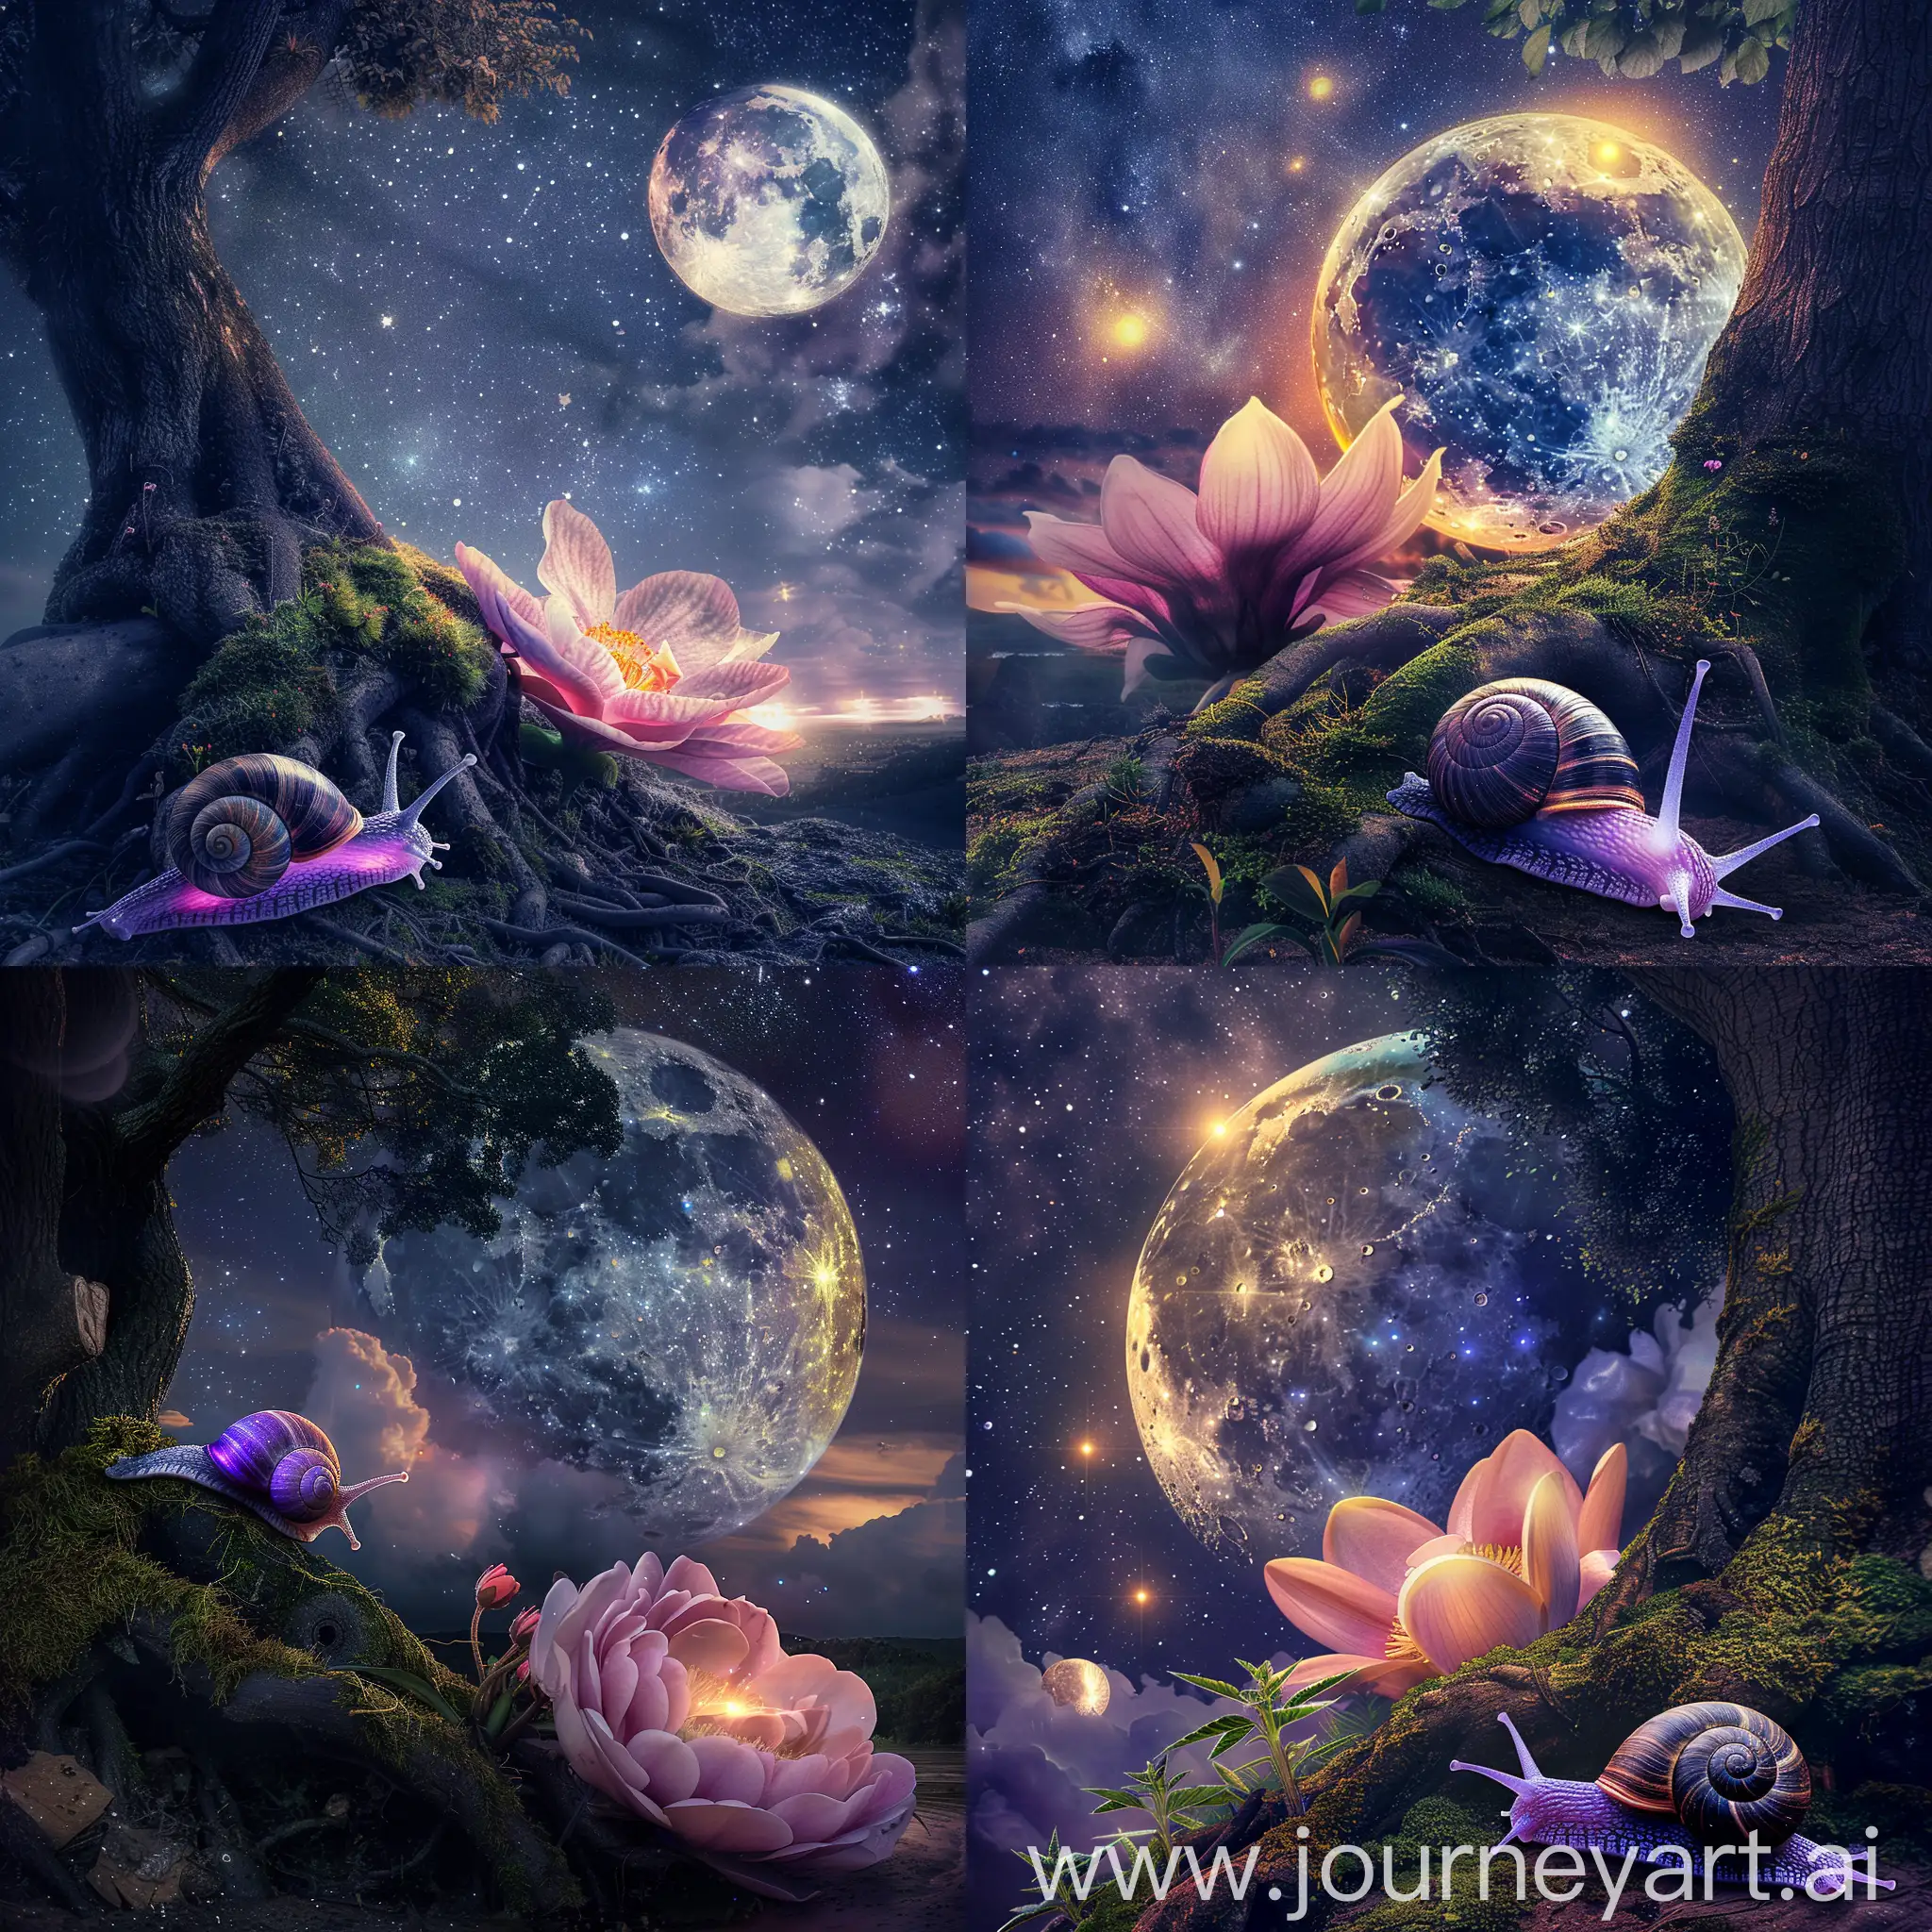 Luminous-Snail-Approaches-Giant-Pink-Flower-under-Radiant-Moonlight